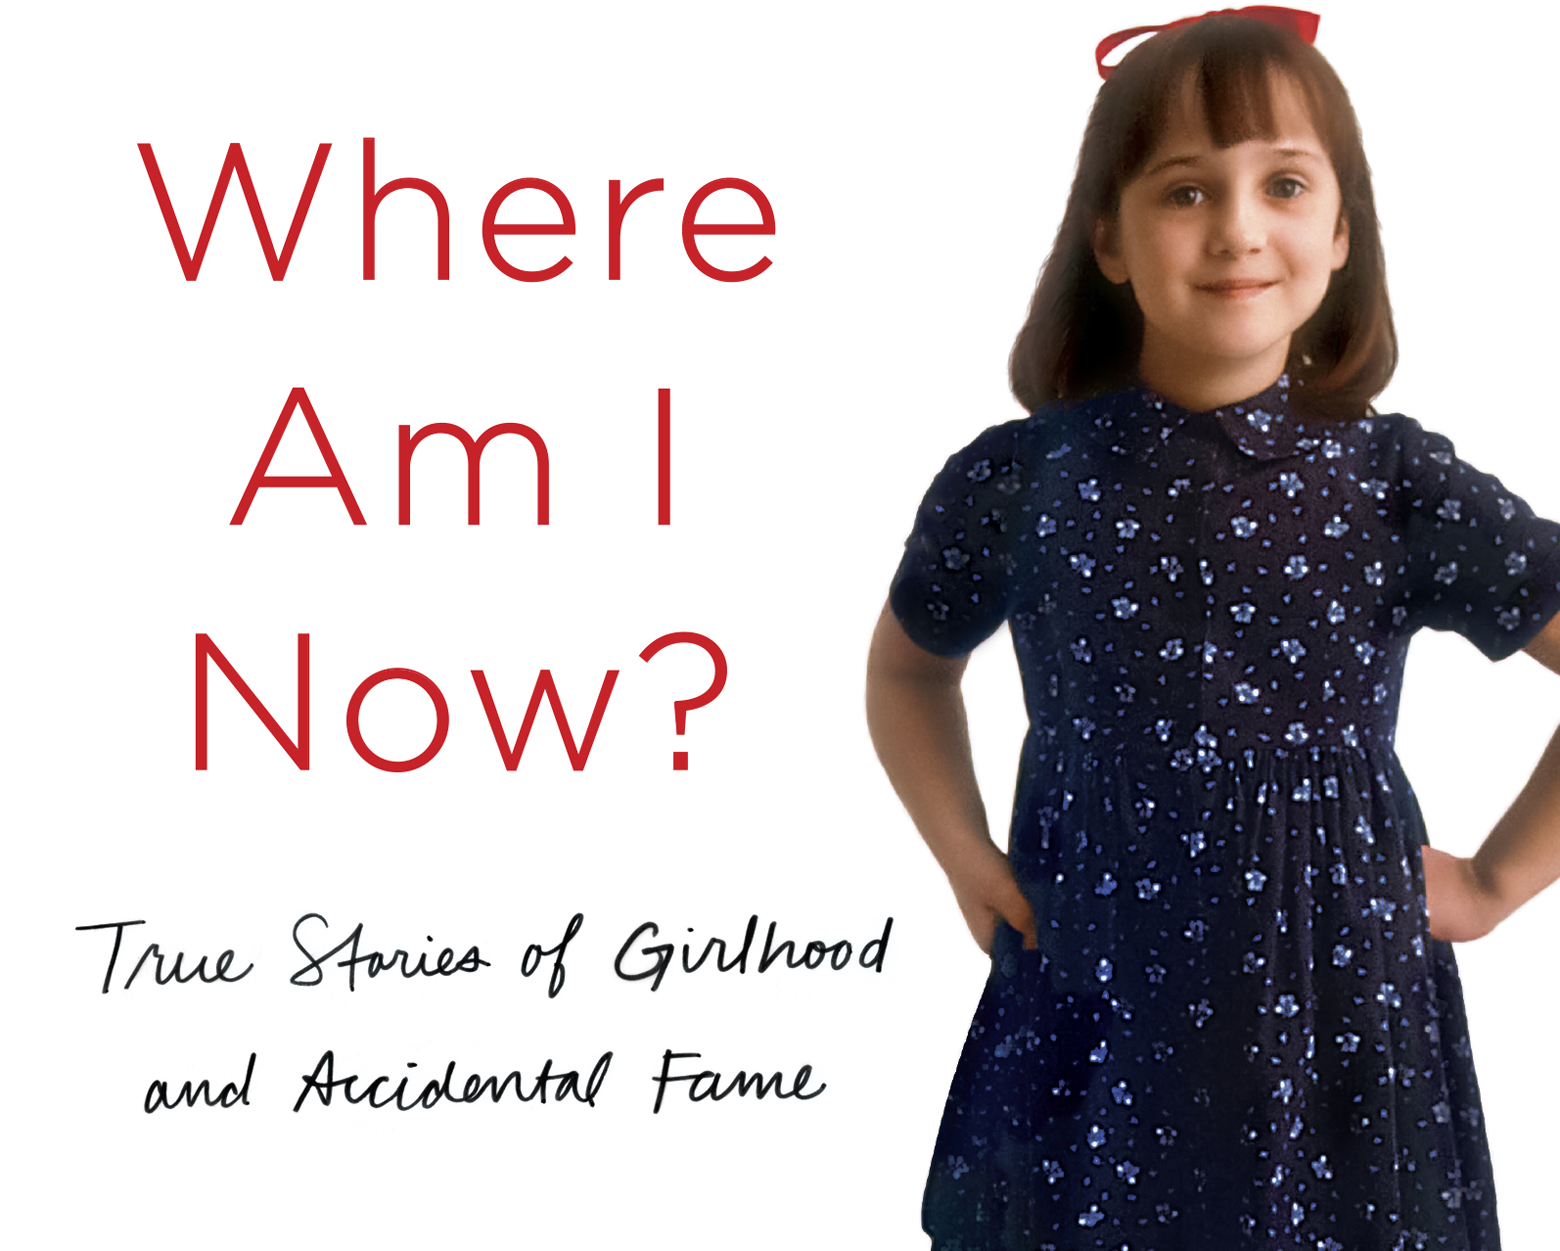 Mara Wilson appears on the cover of her new memoir "Where Am I Now? True Stories of Girlhood and Accidental Fame." (Courtesy Penguin Random House)